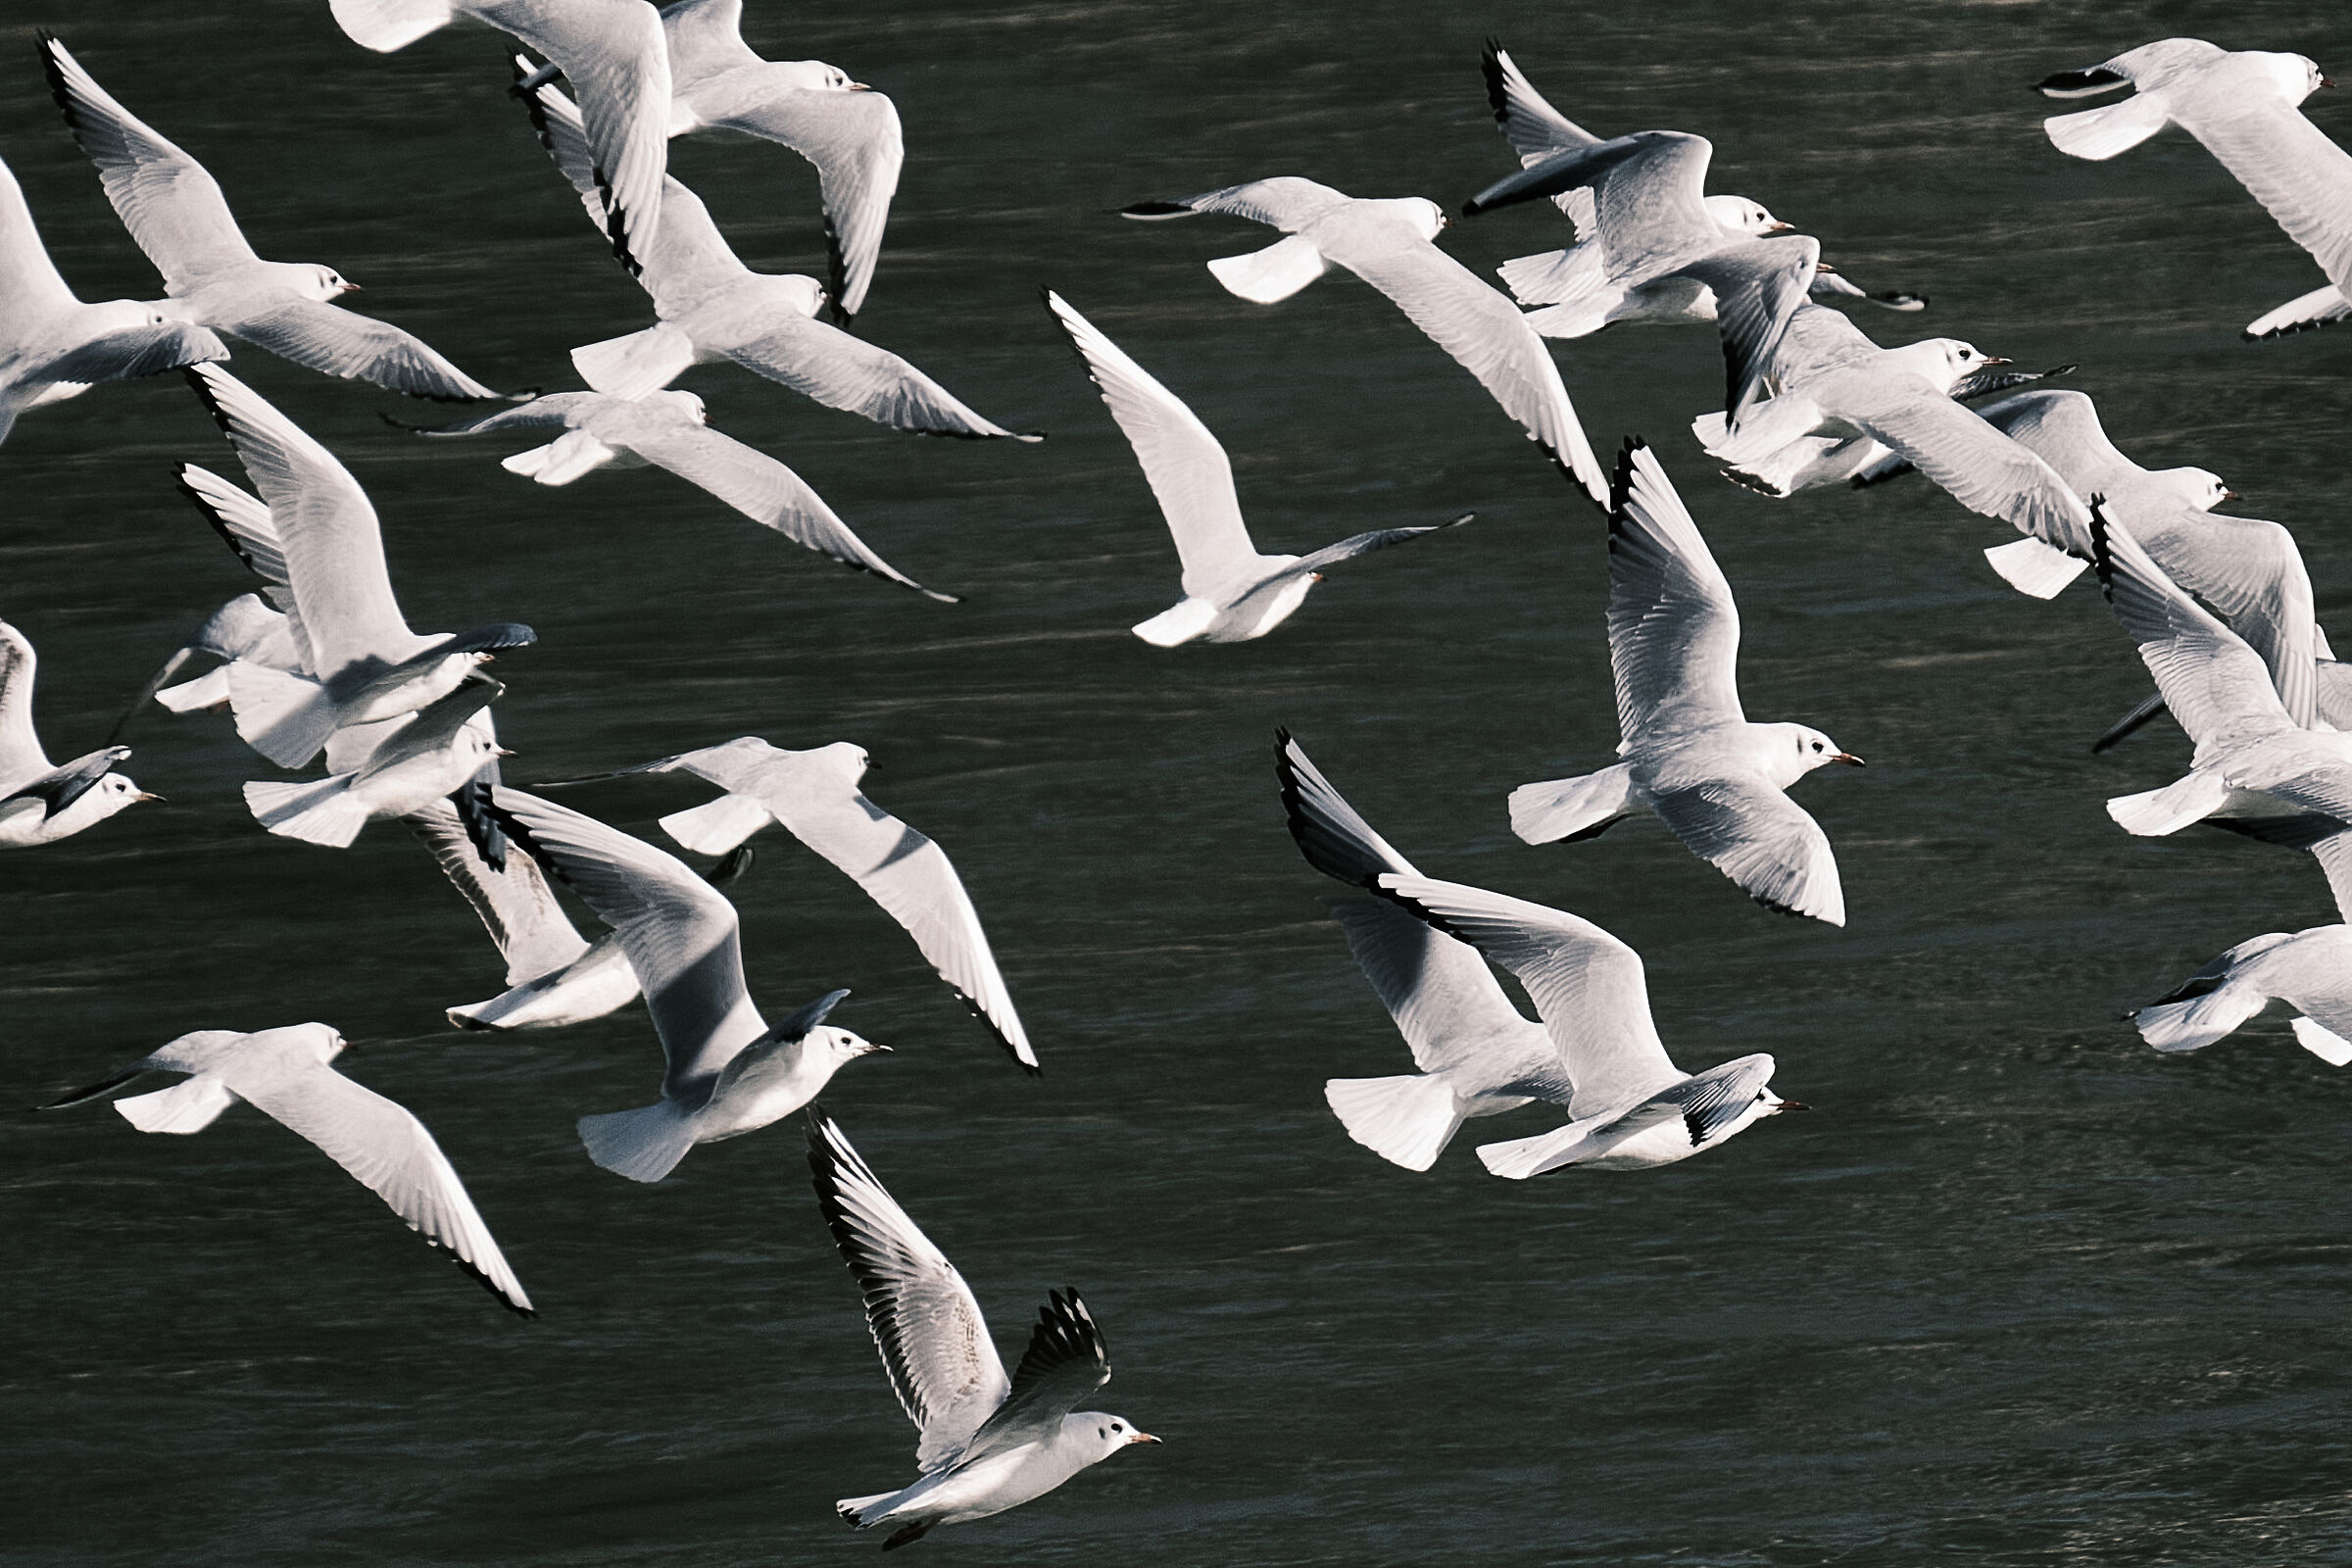 Flight of seagulls...